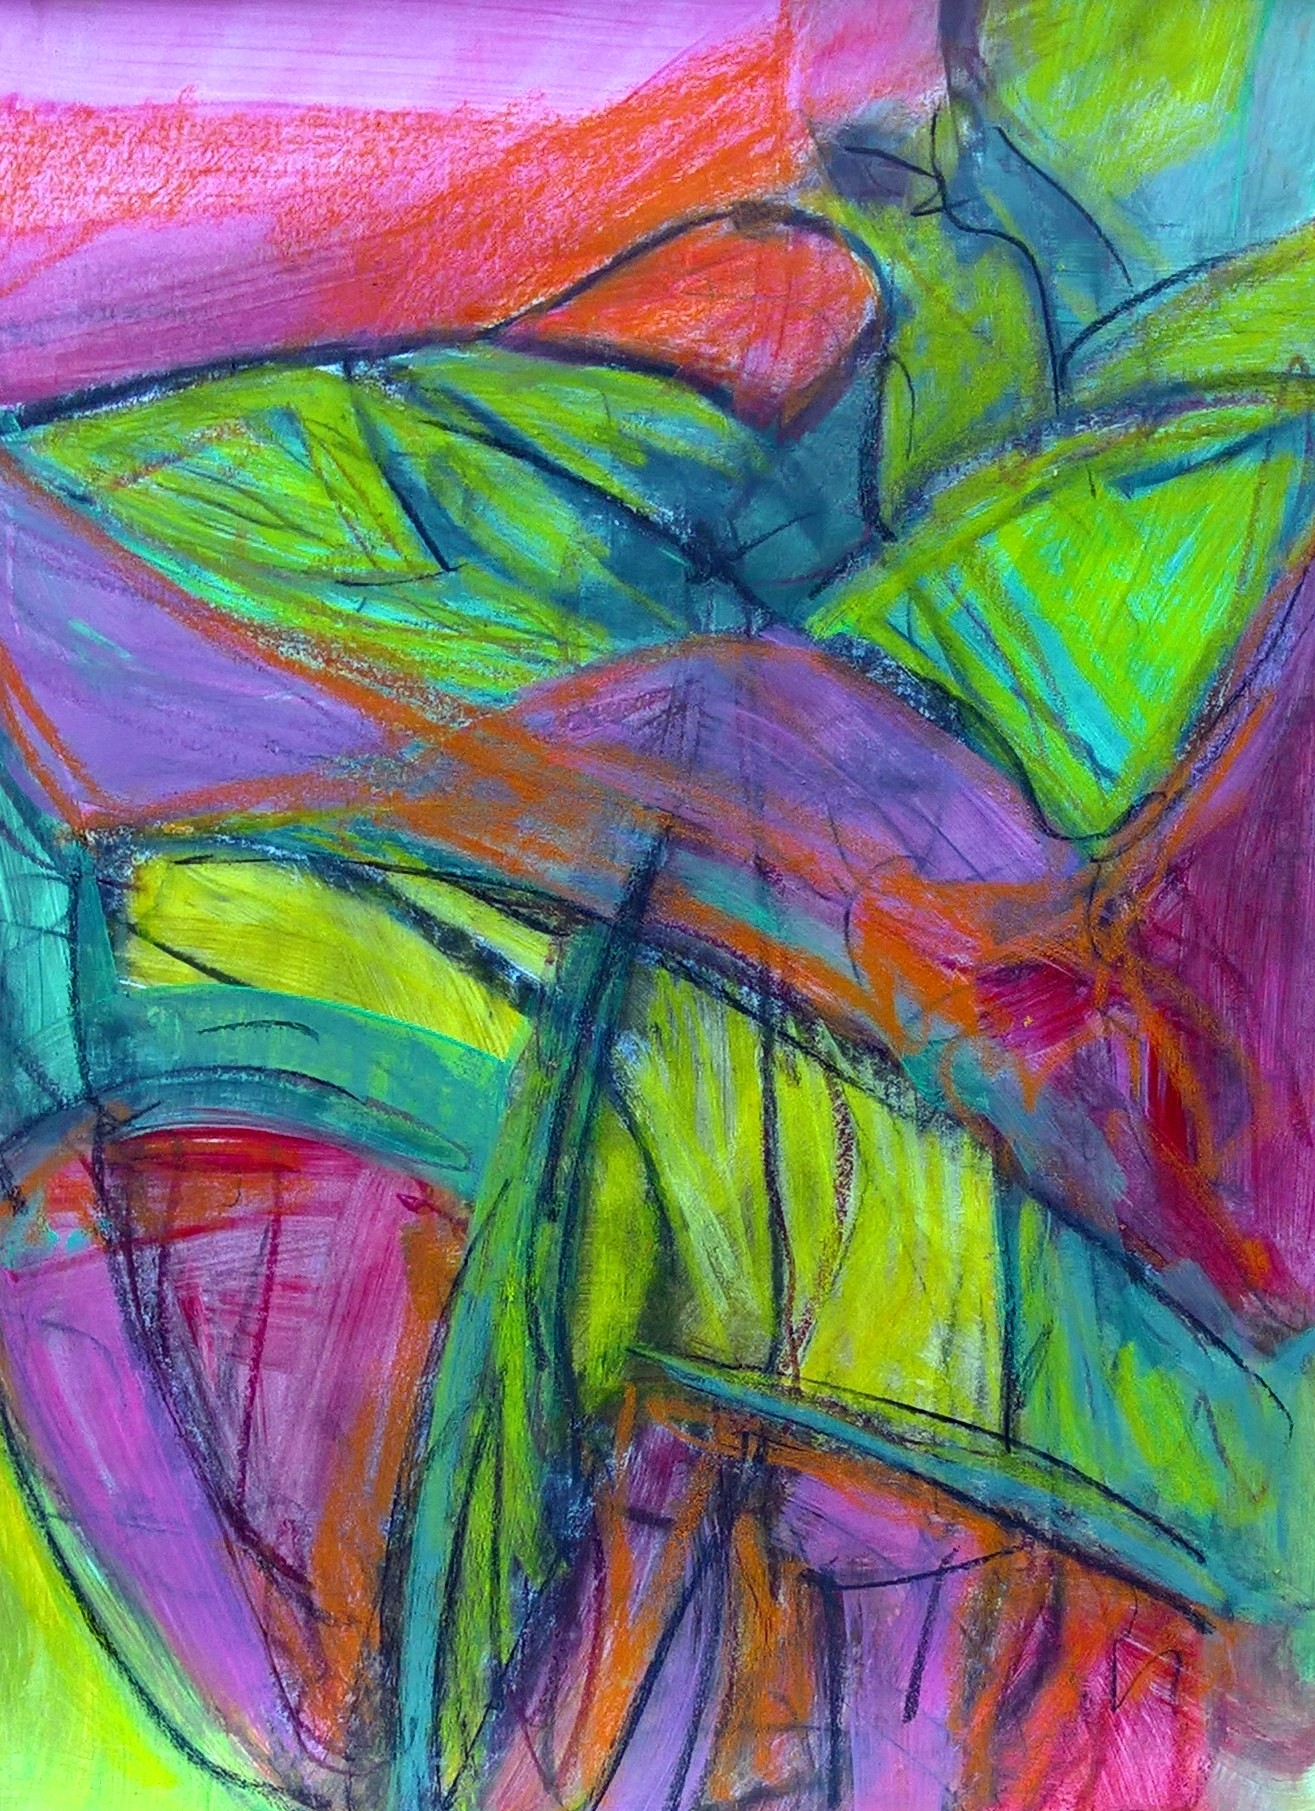 Colour Fields, Mixed media on paper, 40 x 50 cm, Copyright @ 2017 Midge